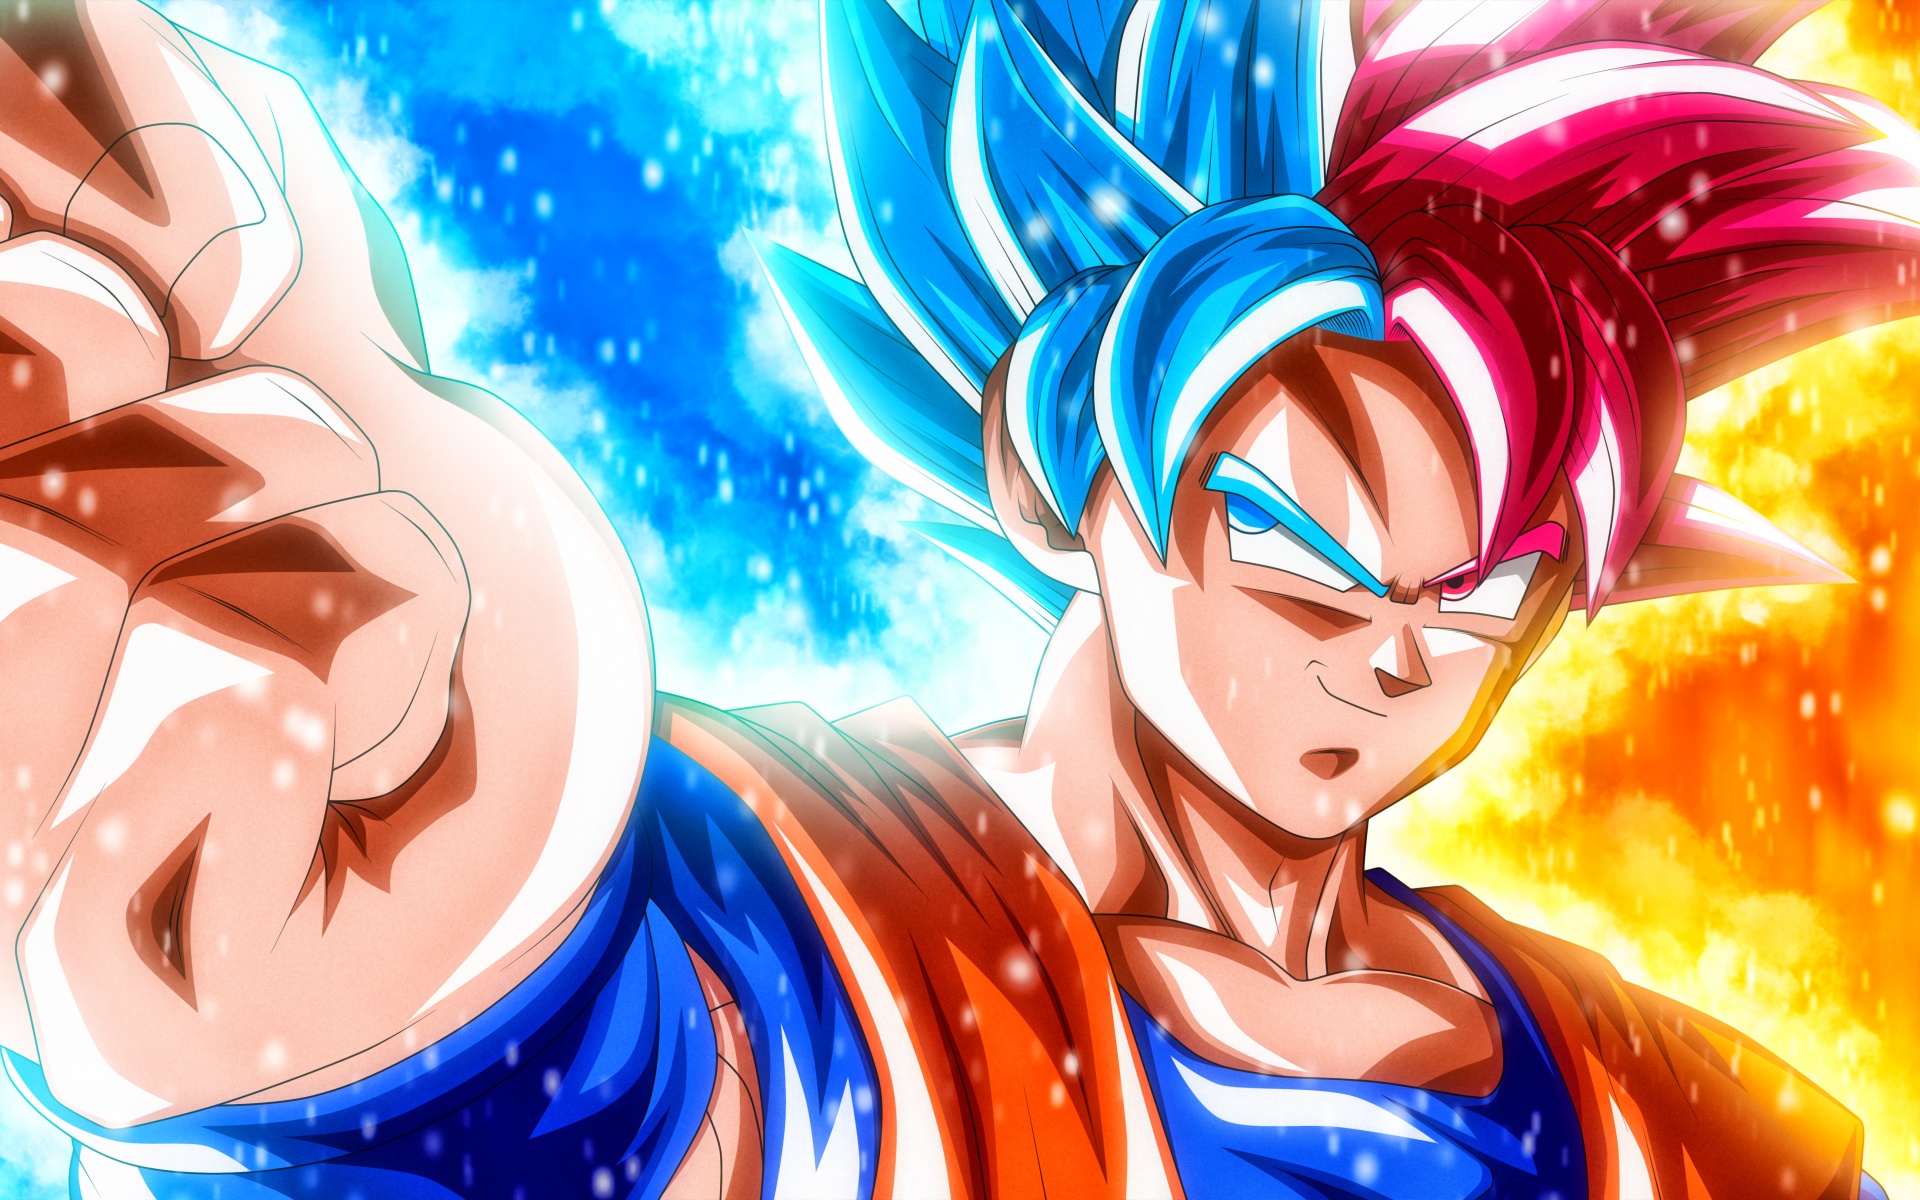 Goku Super Saiyan Blue from Dragon Ball Super Anime Wallpaper ID4547